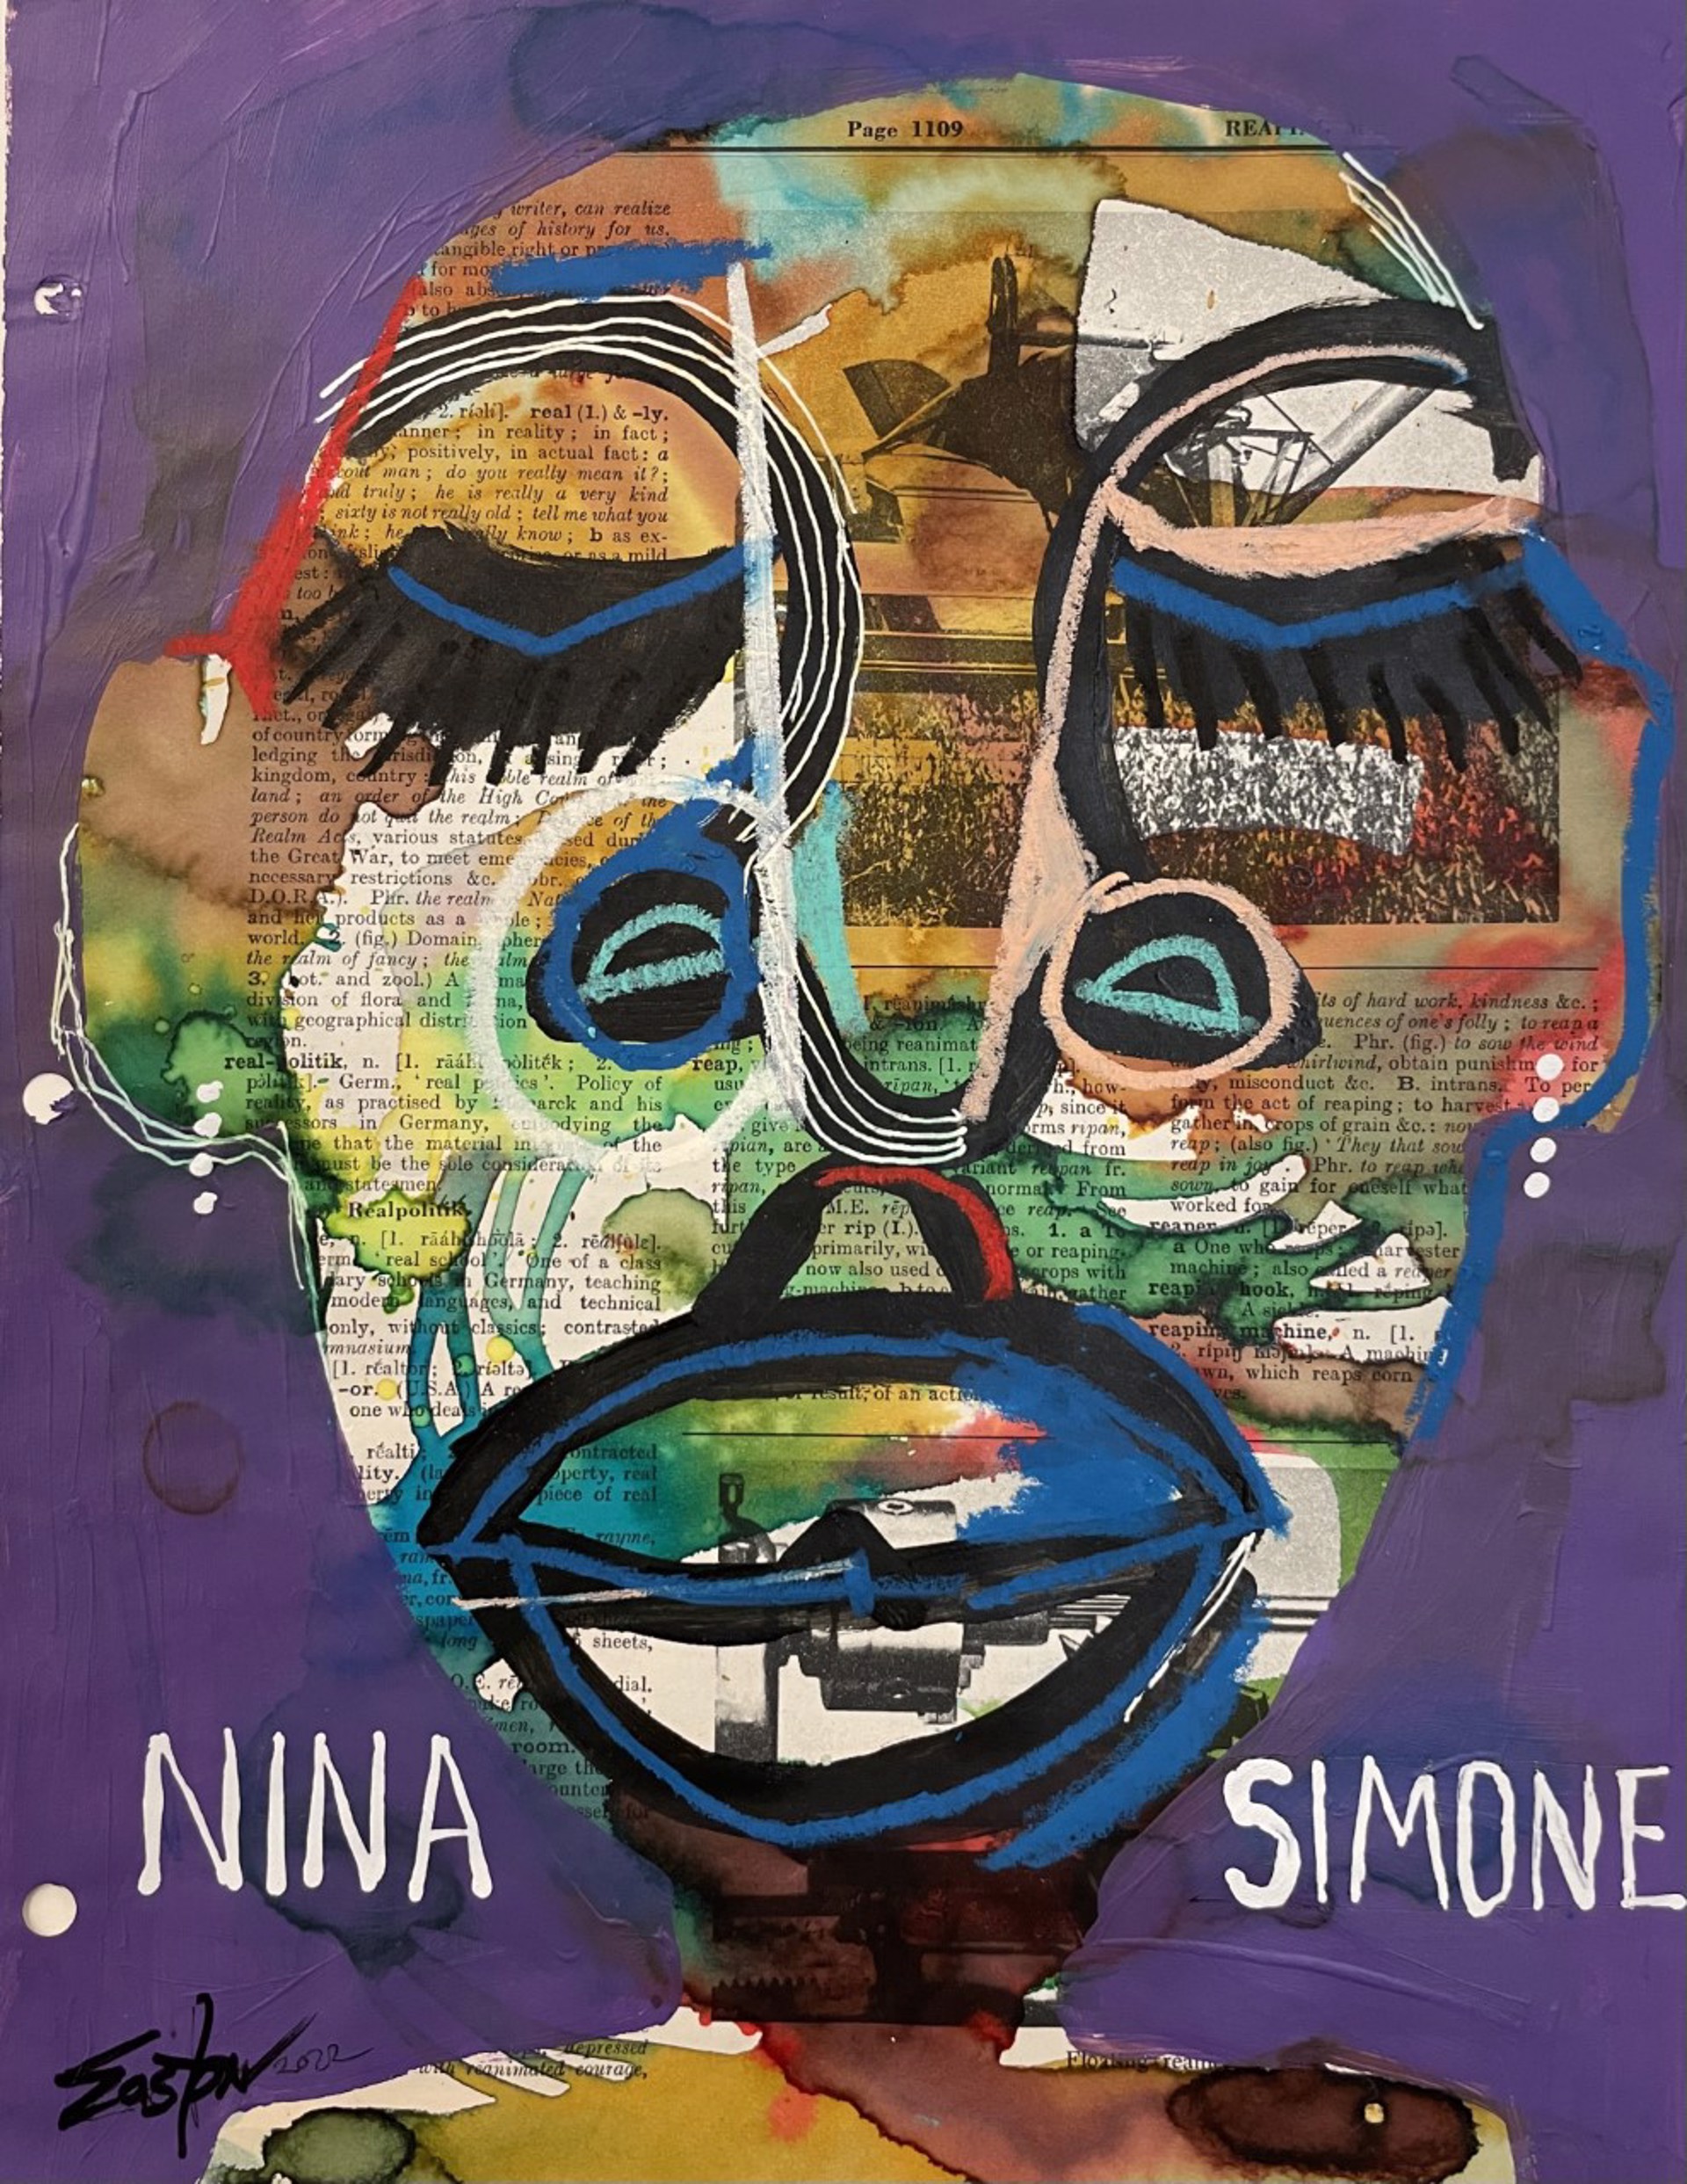 "Nina Simone" by Easton Davy